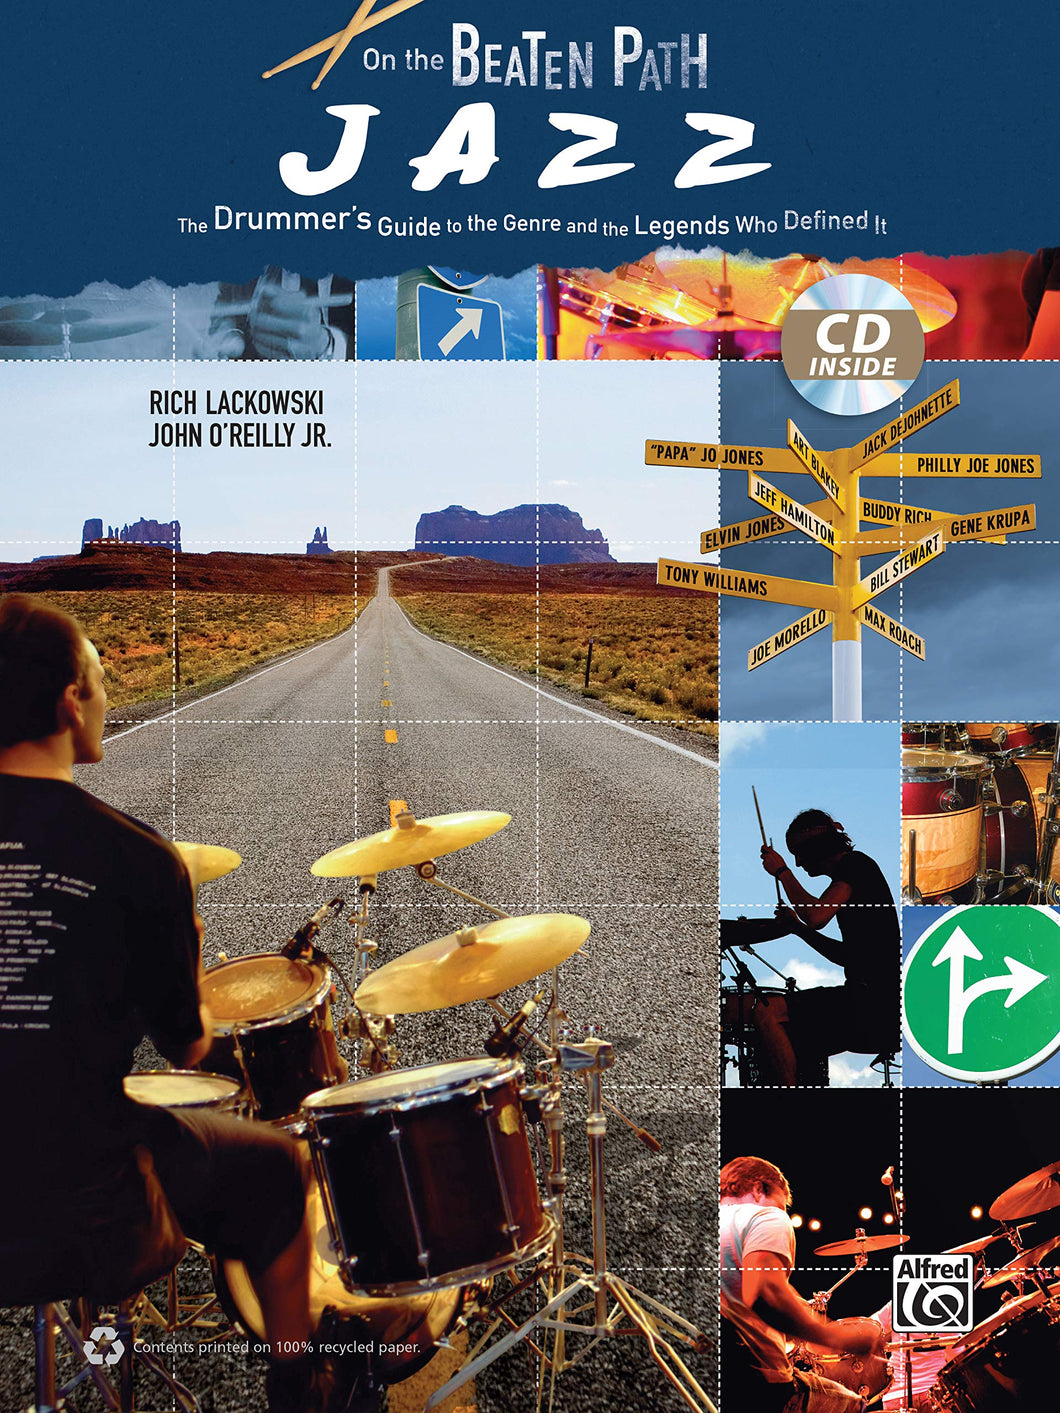 Blue Rondo a la Turk - The Dave Brubeck Quartet - Collection of Drum Transcriptions / Drum Sheet Music - Alfred Music OBPJDGLDI